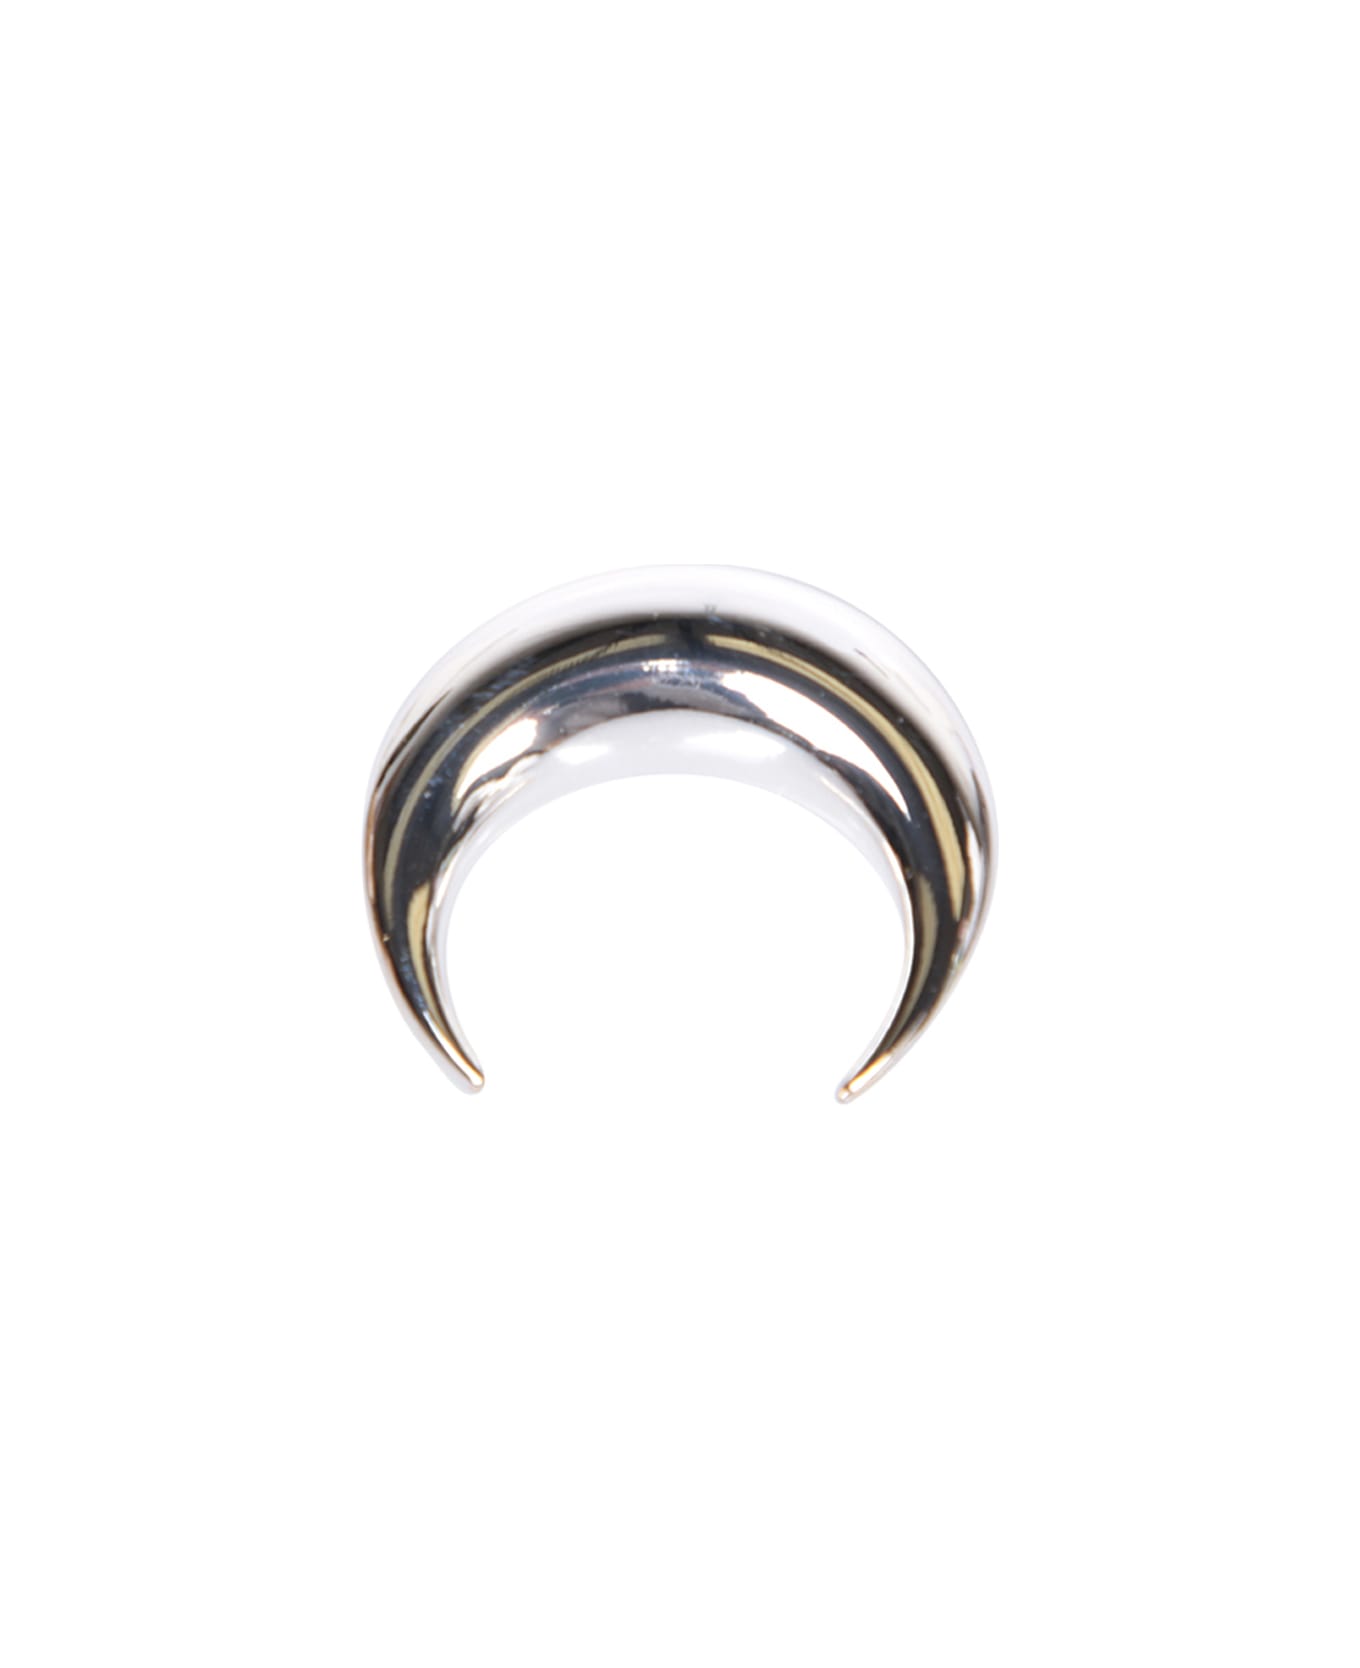 Marine Serre Silver Moon Single Earring - Metallic